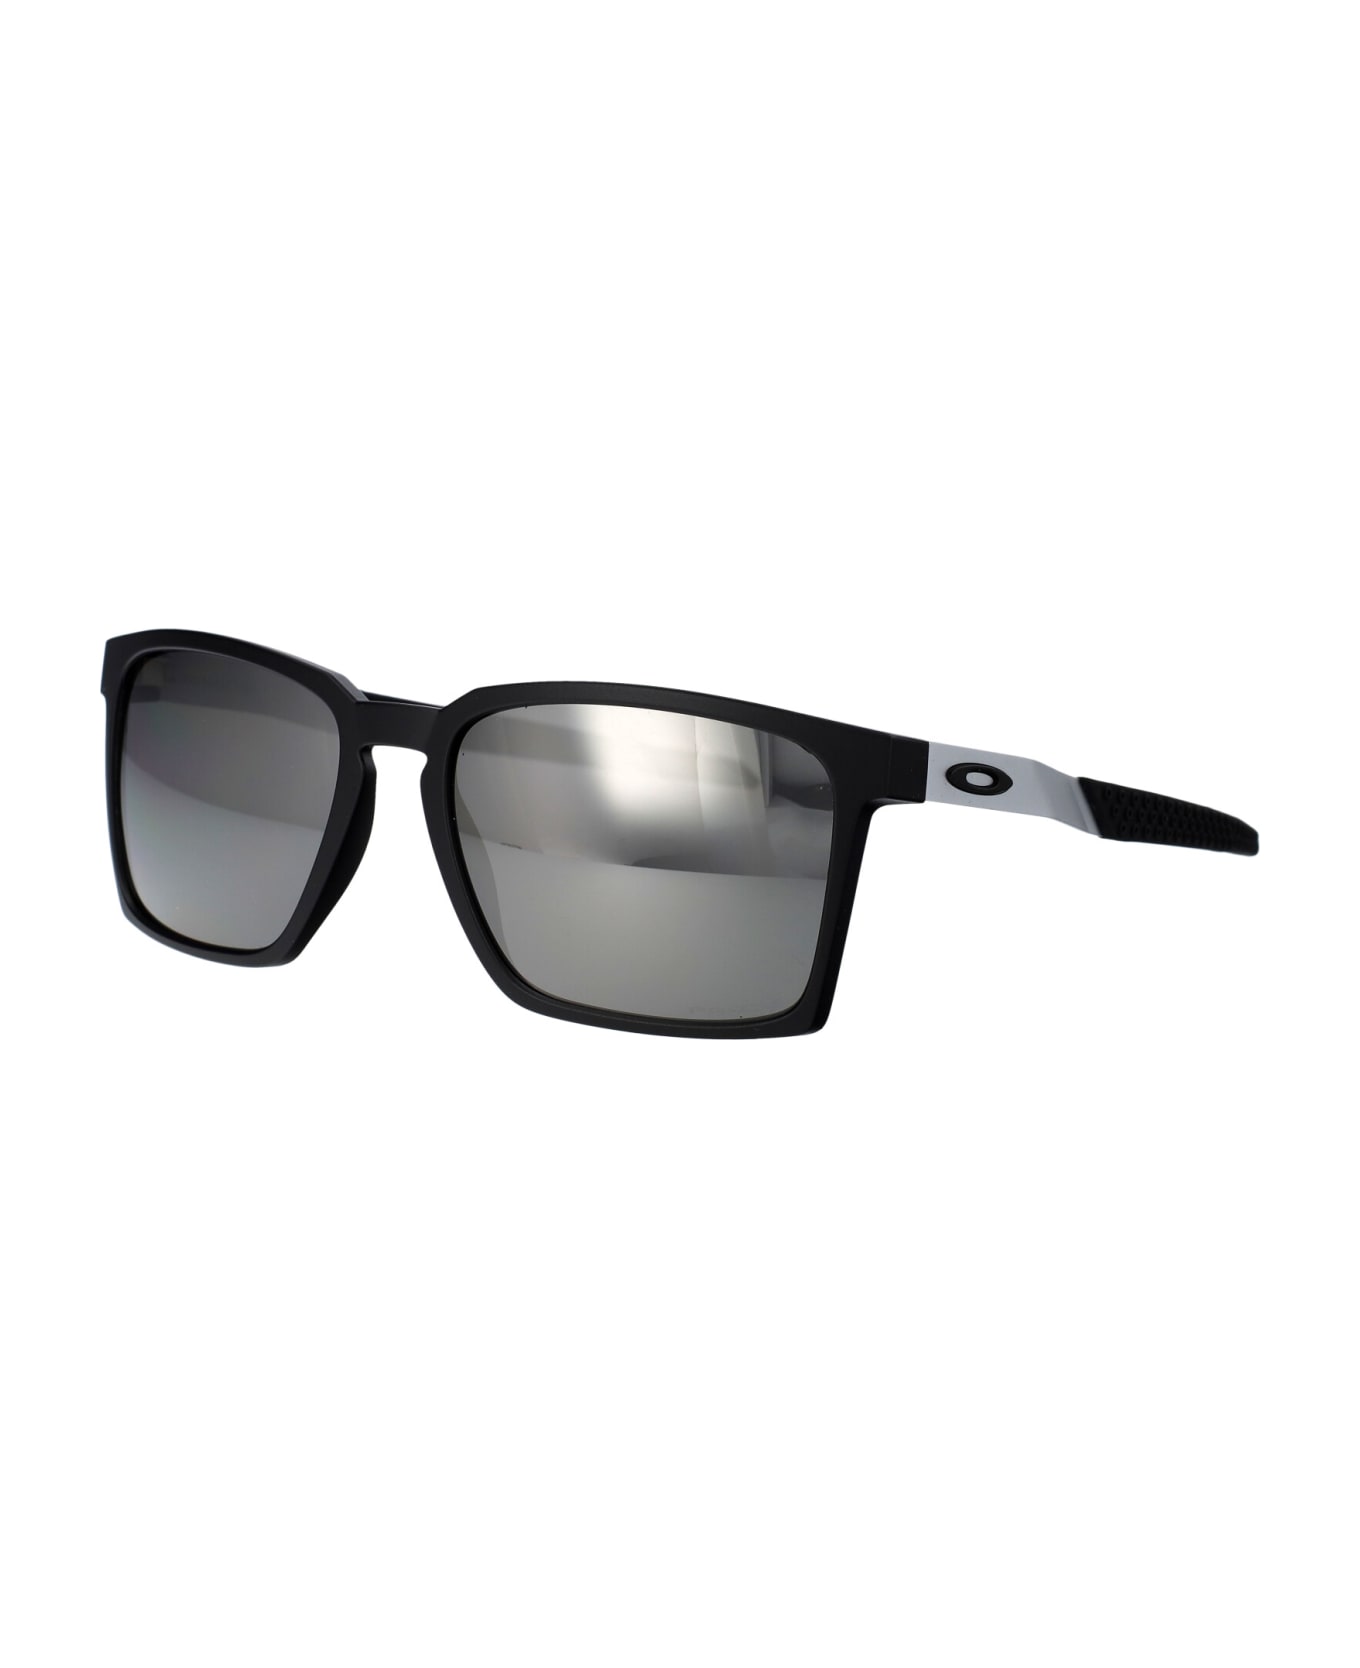 Oakley Exchange Sun Sunglasses - 948301 Satin Black